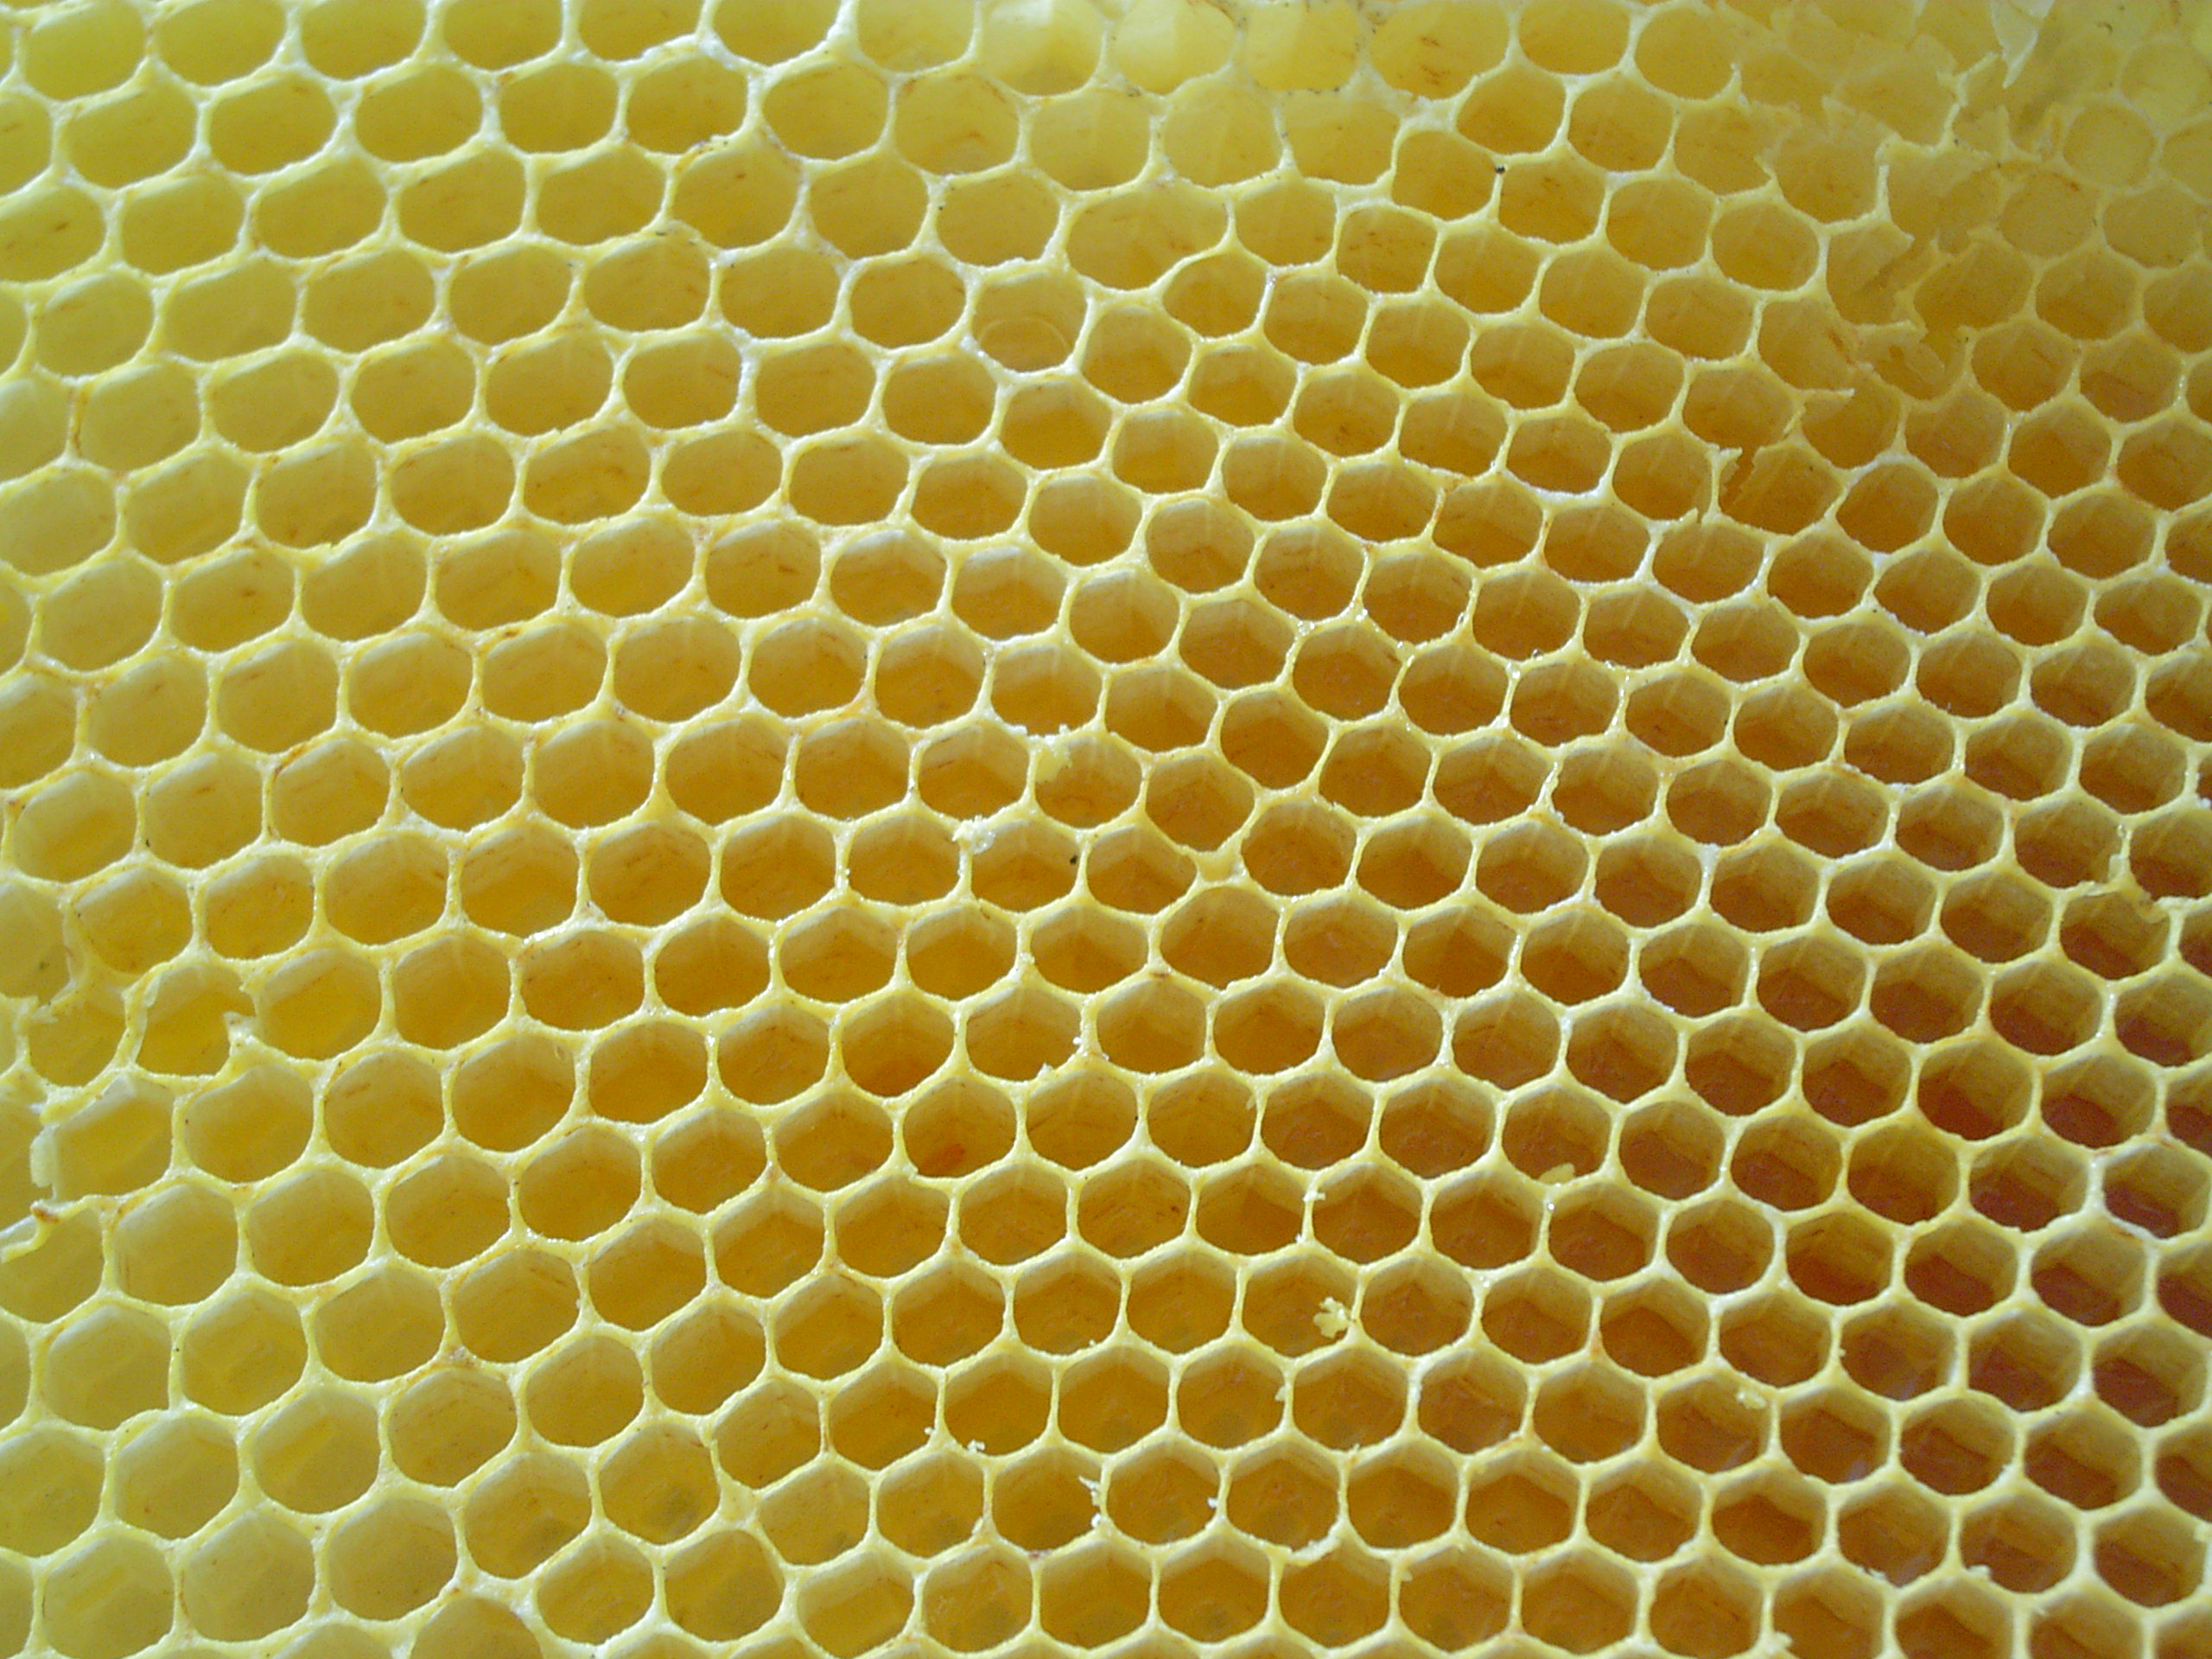 Honeycombs-rayons-de-miel-4.jpg